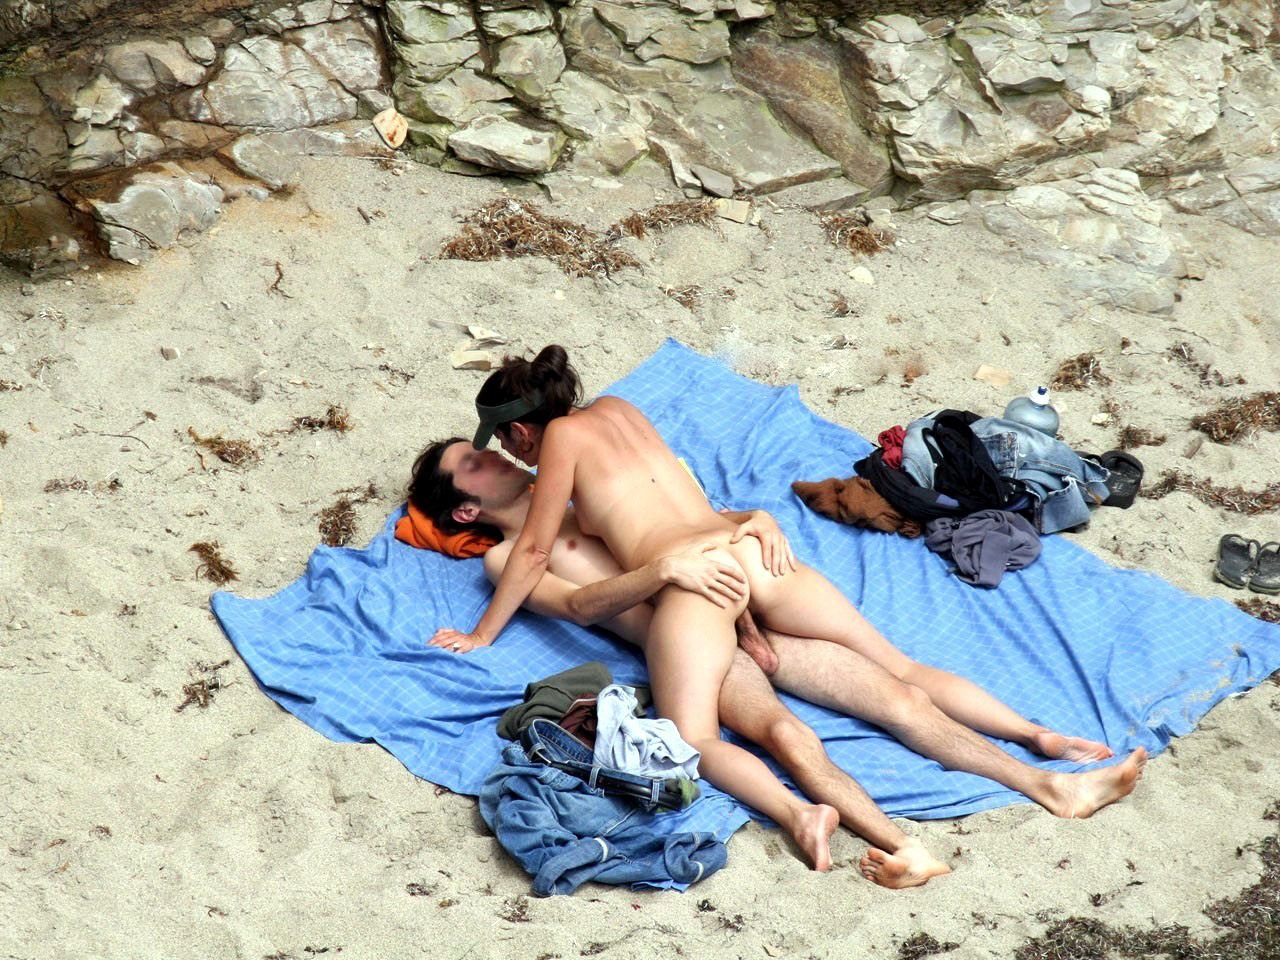 Hidden camera on the nudist beach image photo